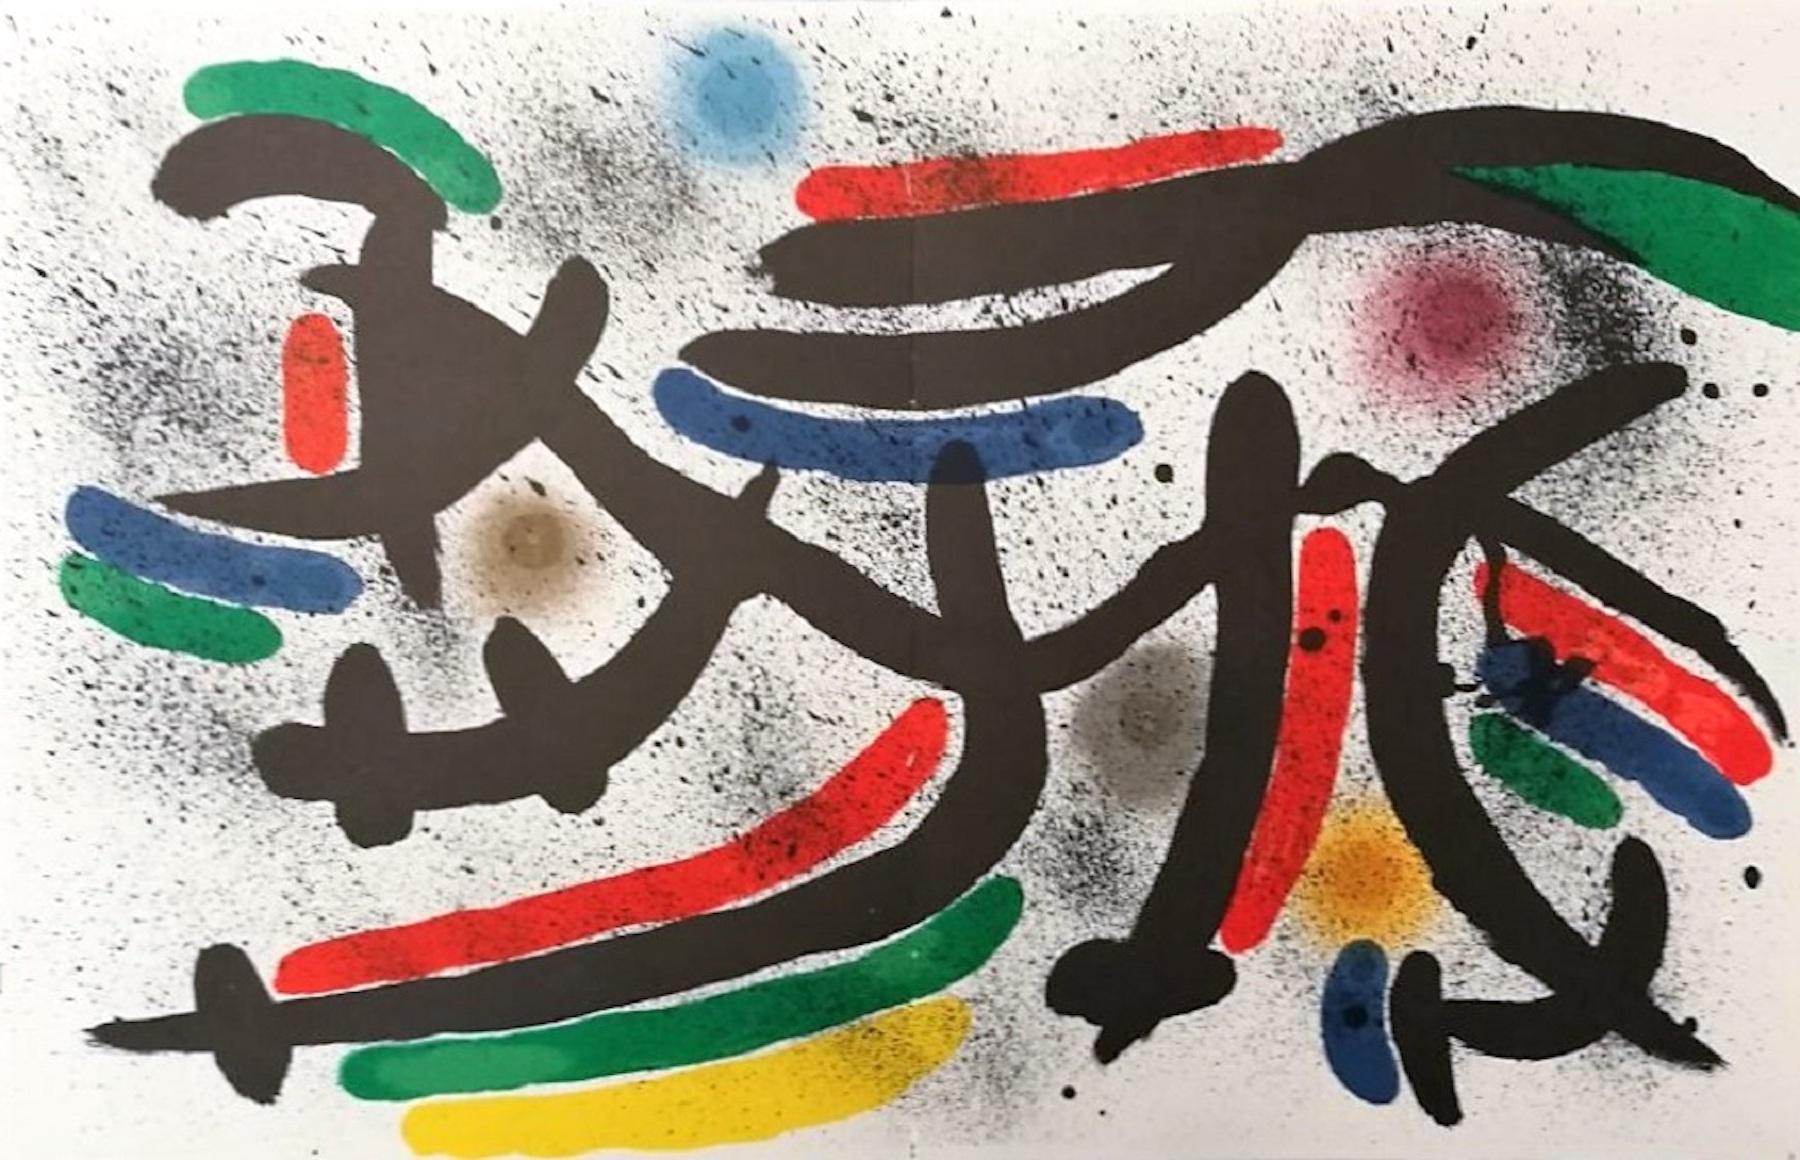 Joan Miró Abstract Print - Mirò Lithographe I - Plate IX - Original Lithograph - 1972